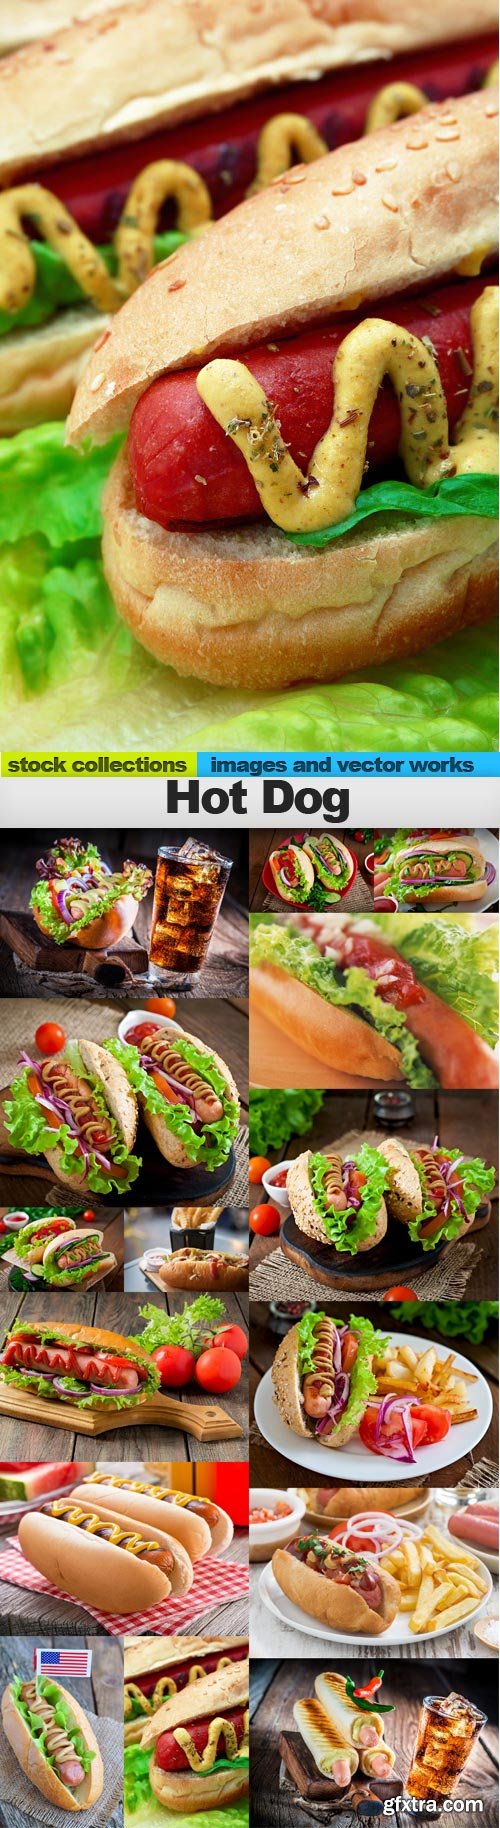 Hot Dog, 15 x UHQ JPEG